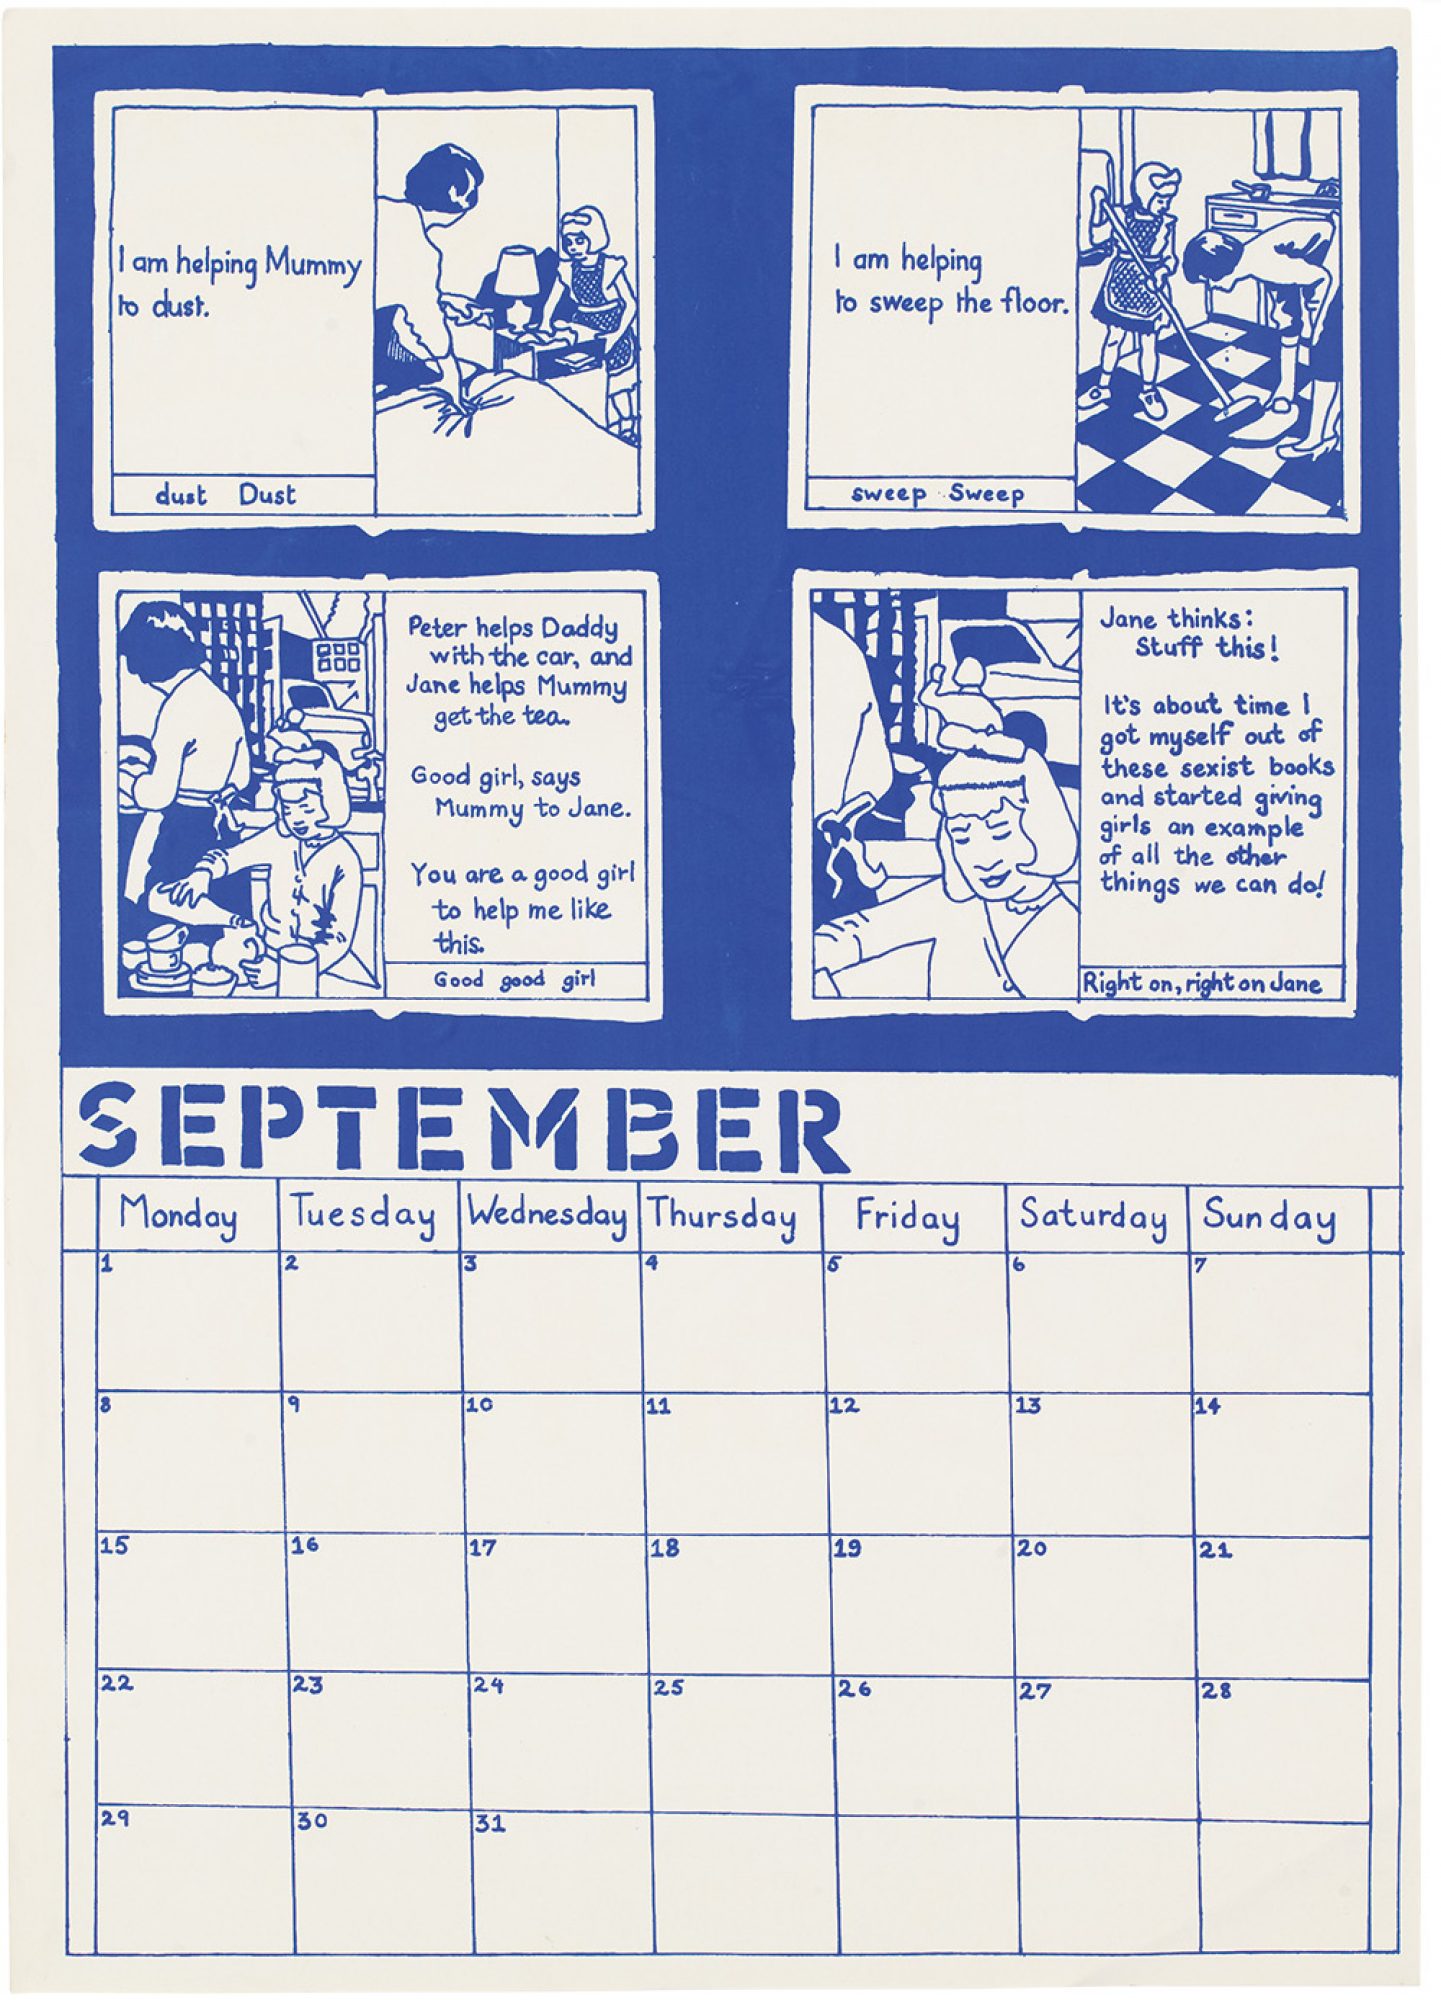 1977 Calendar Features Four Corners Books